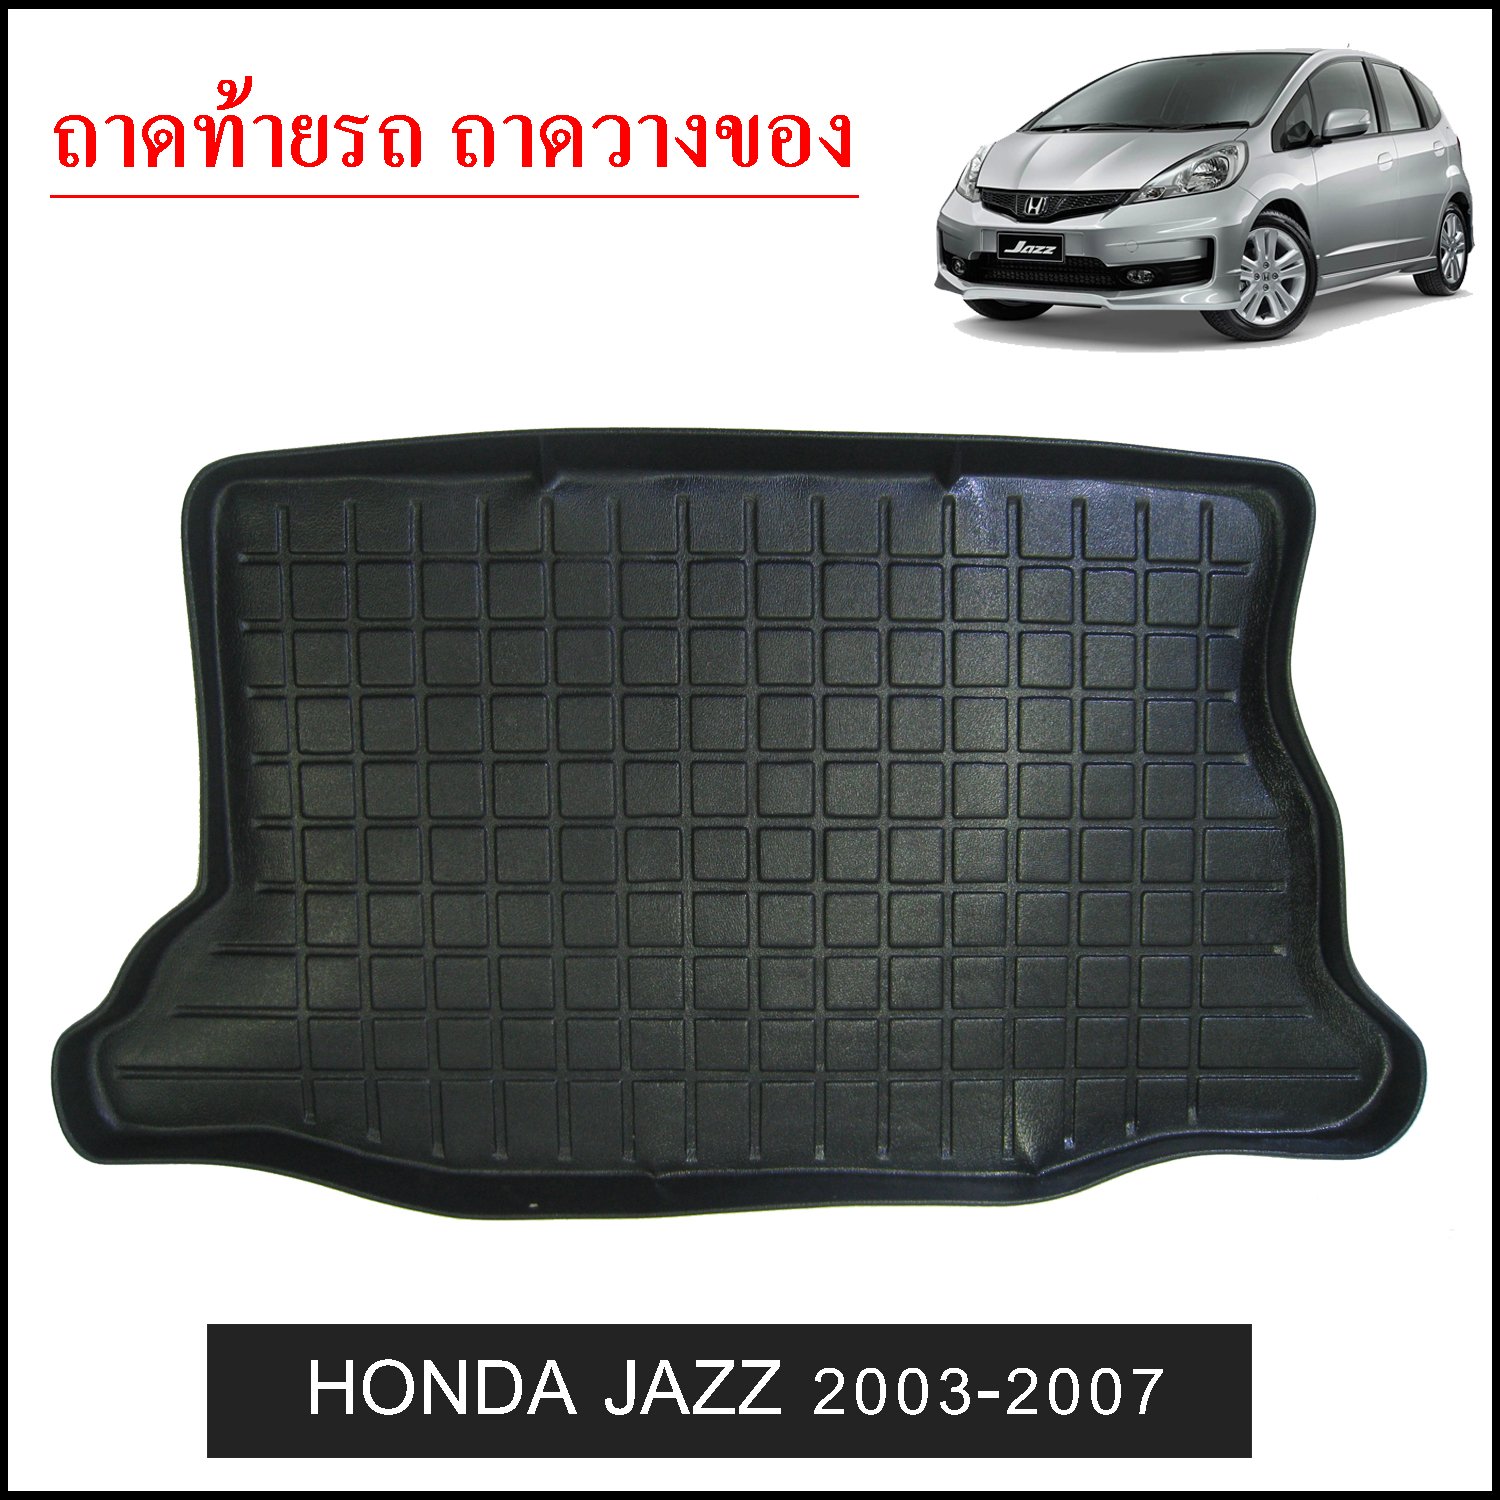 Honda Jazz 2003-2007